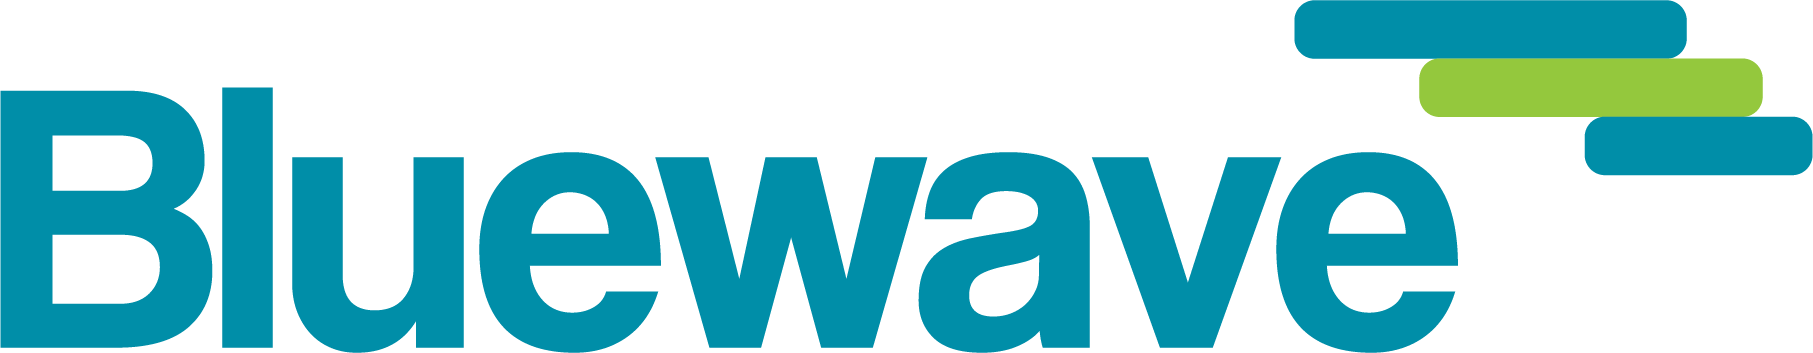 Bluewave_logo-4c